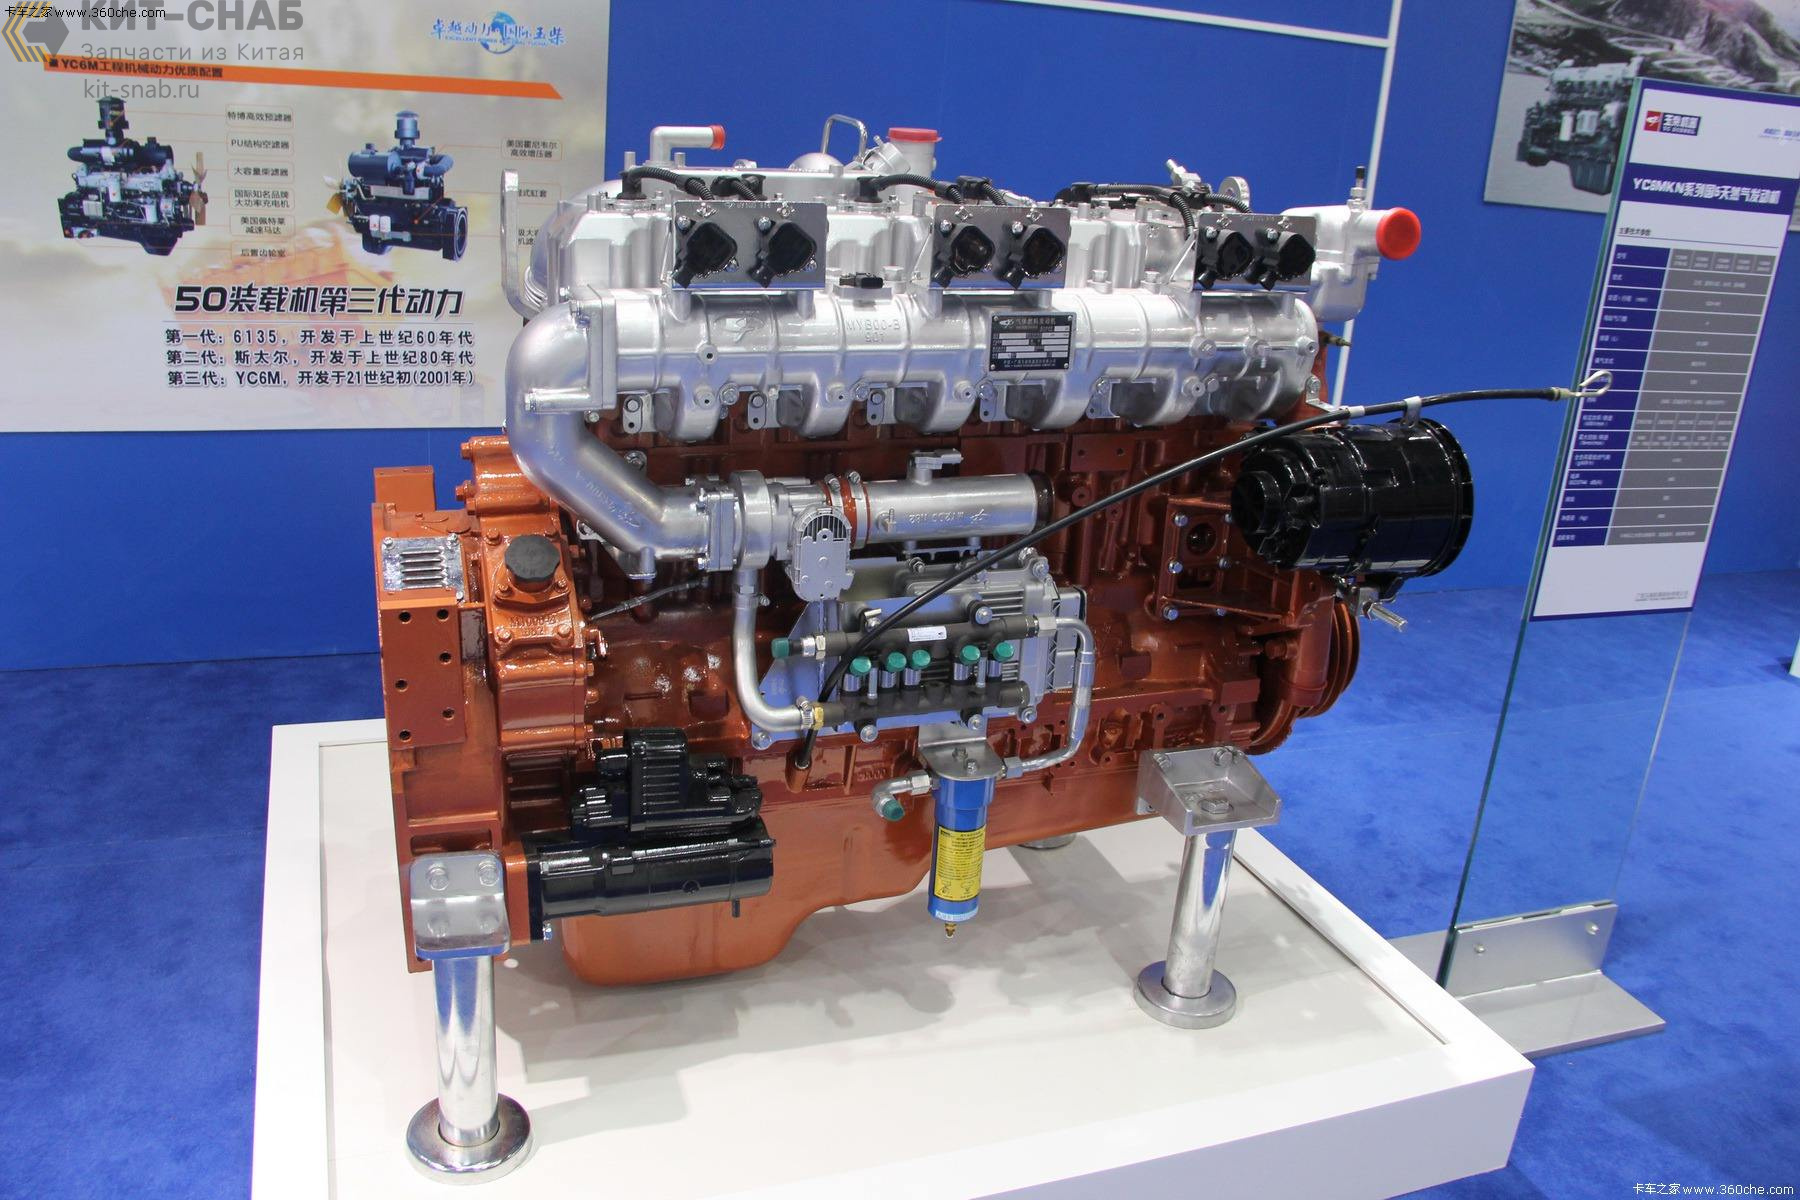 Двигатель Yuchai YC6MK340N-50